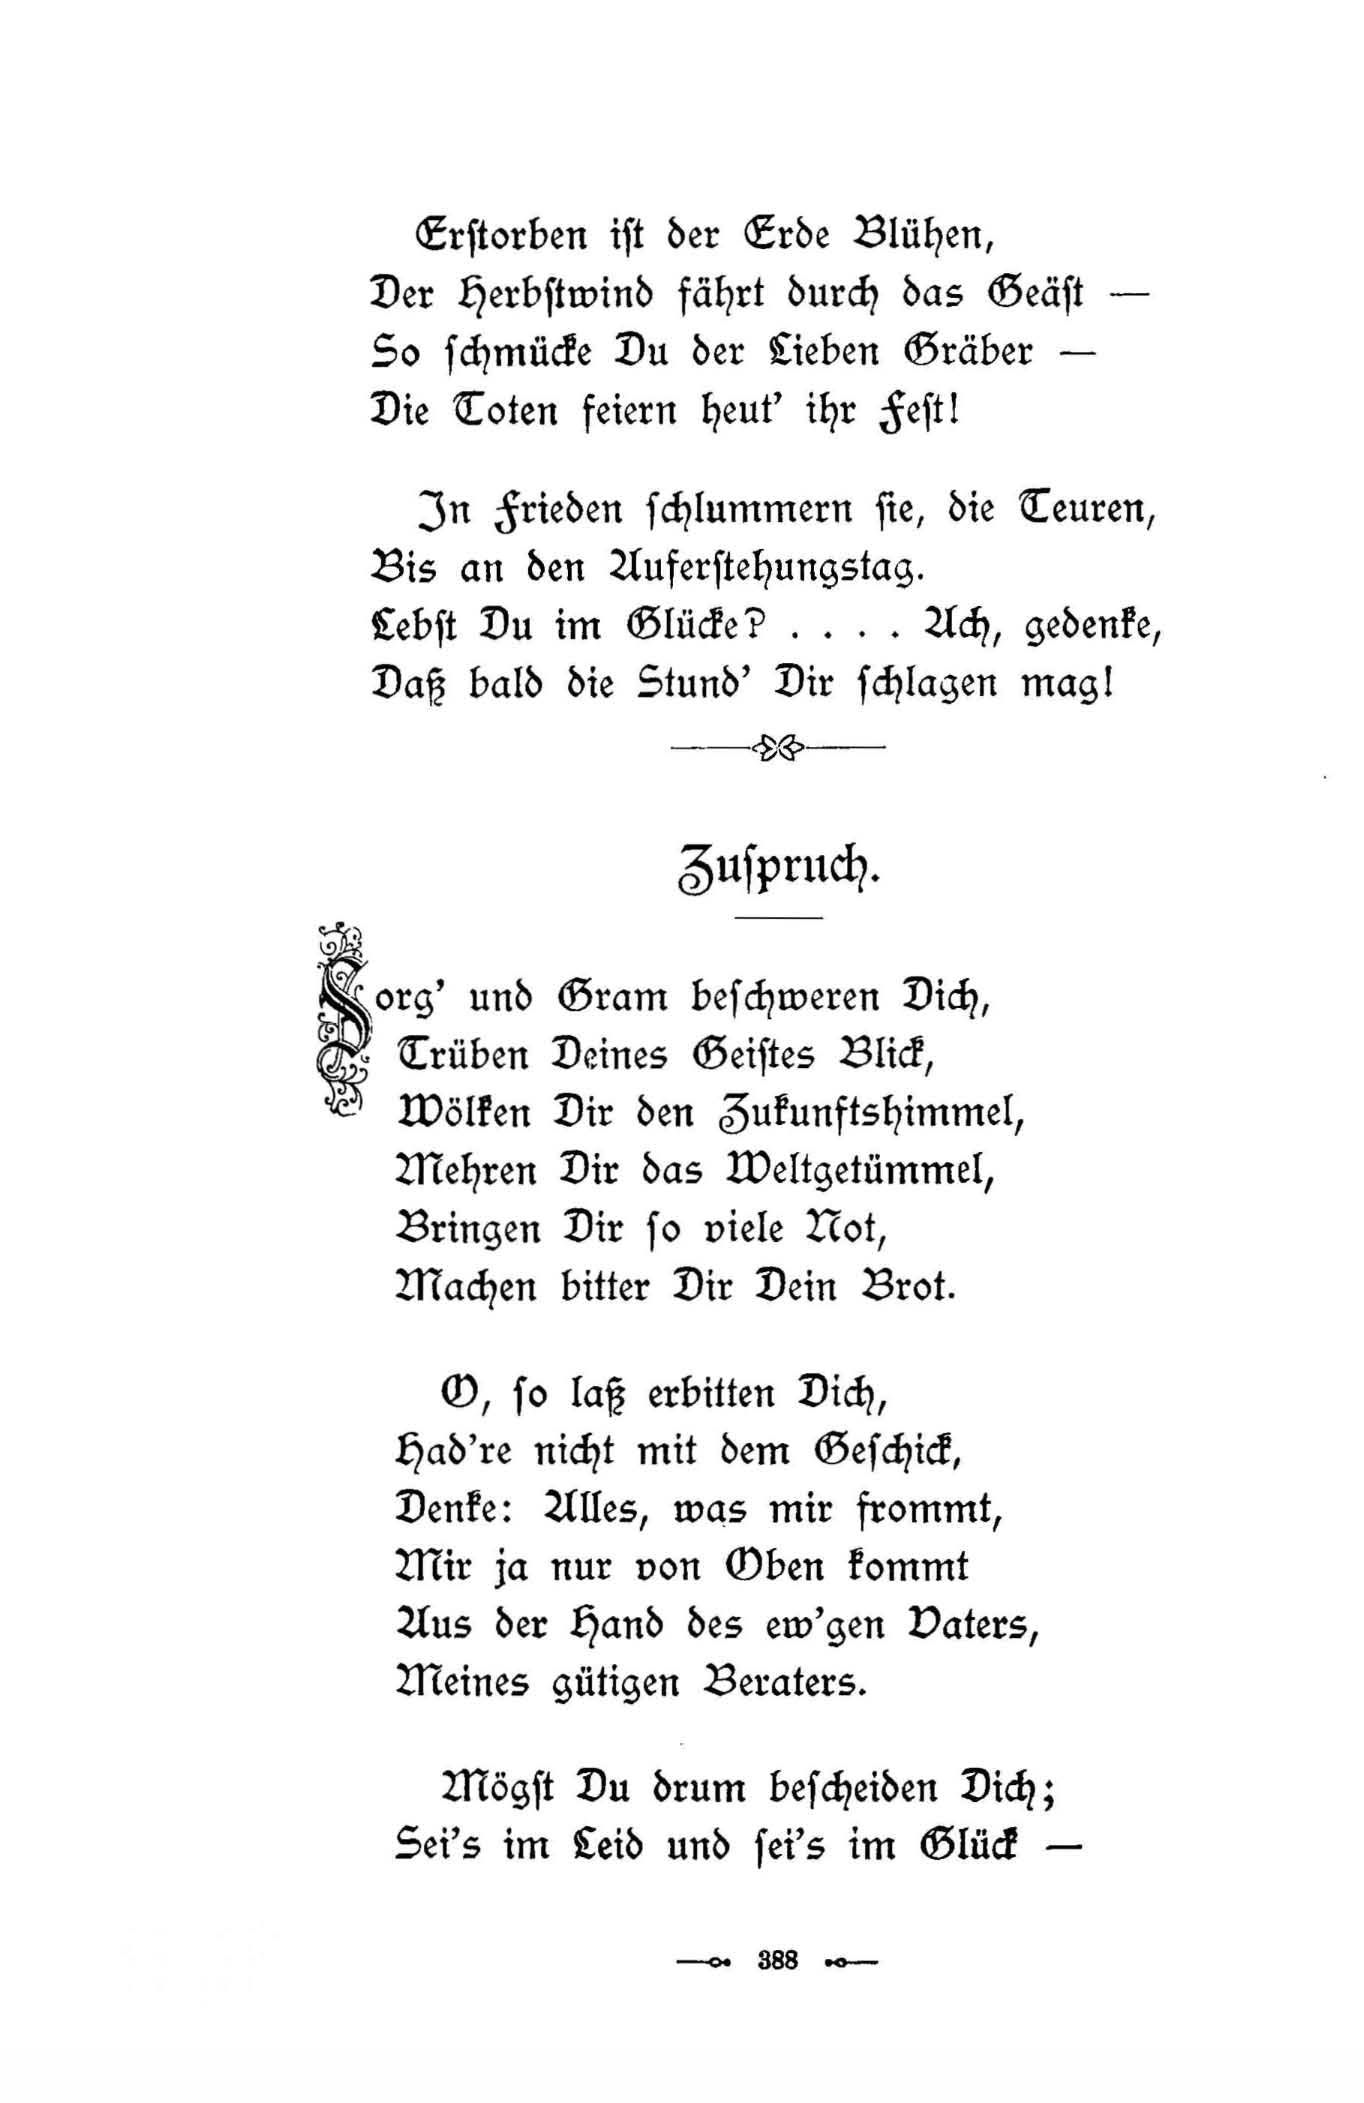 Zuspruch (1896) | 1. (388) Main body of text